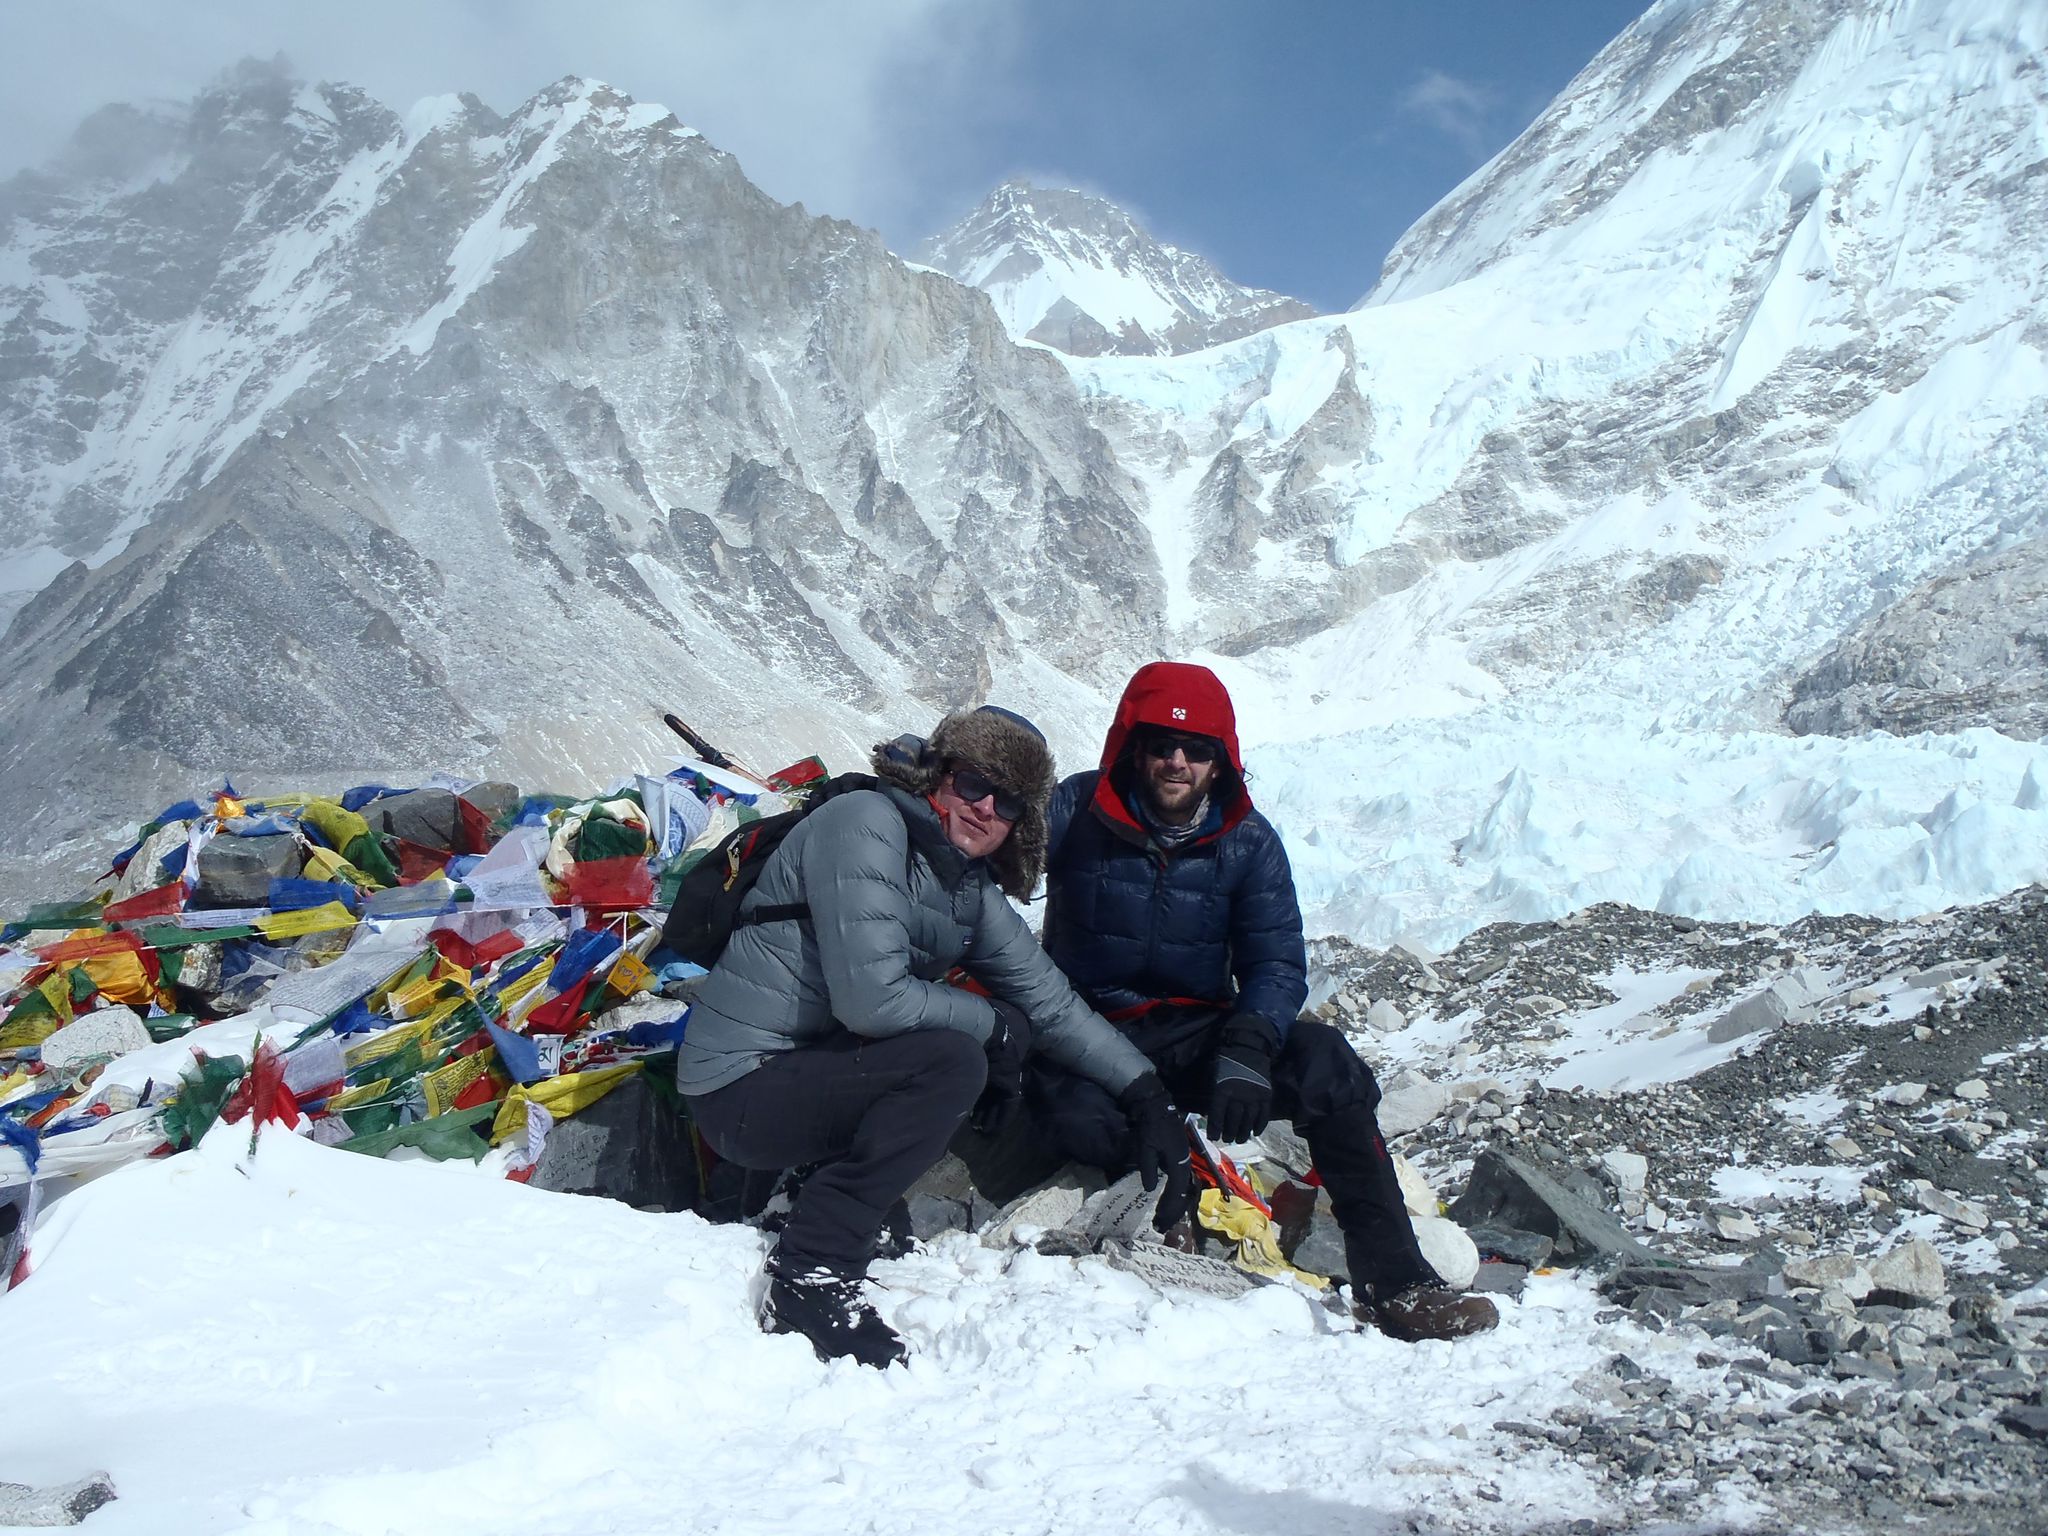 Mission accomplished? Phil and Tim on the Everest Base Camp trek